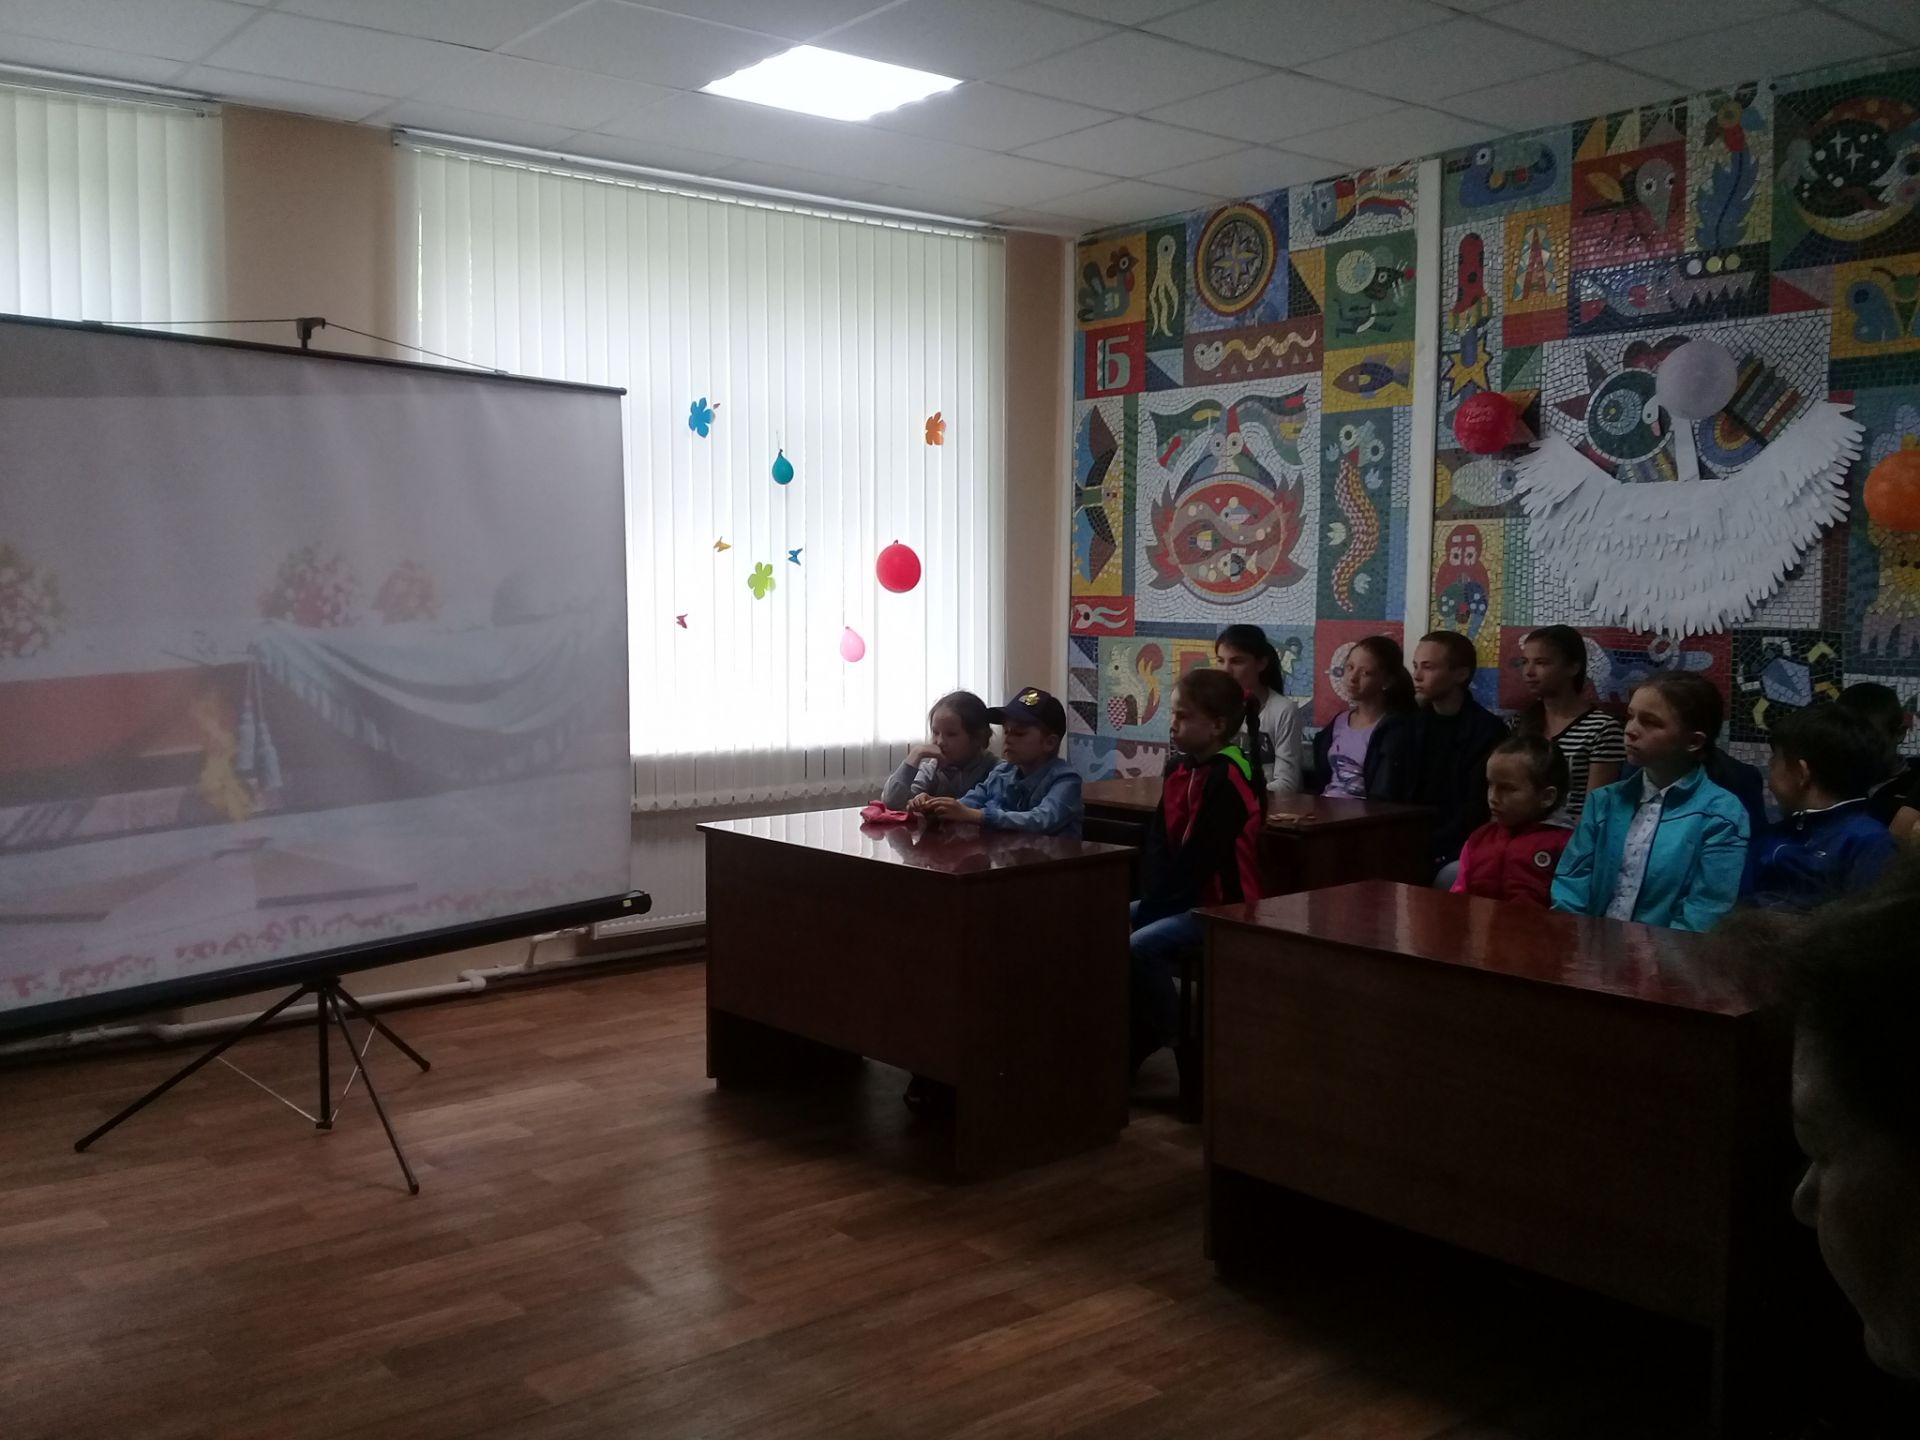 Акция "Свеча памяти" прошла в селе Псеево